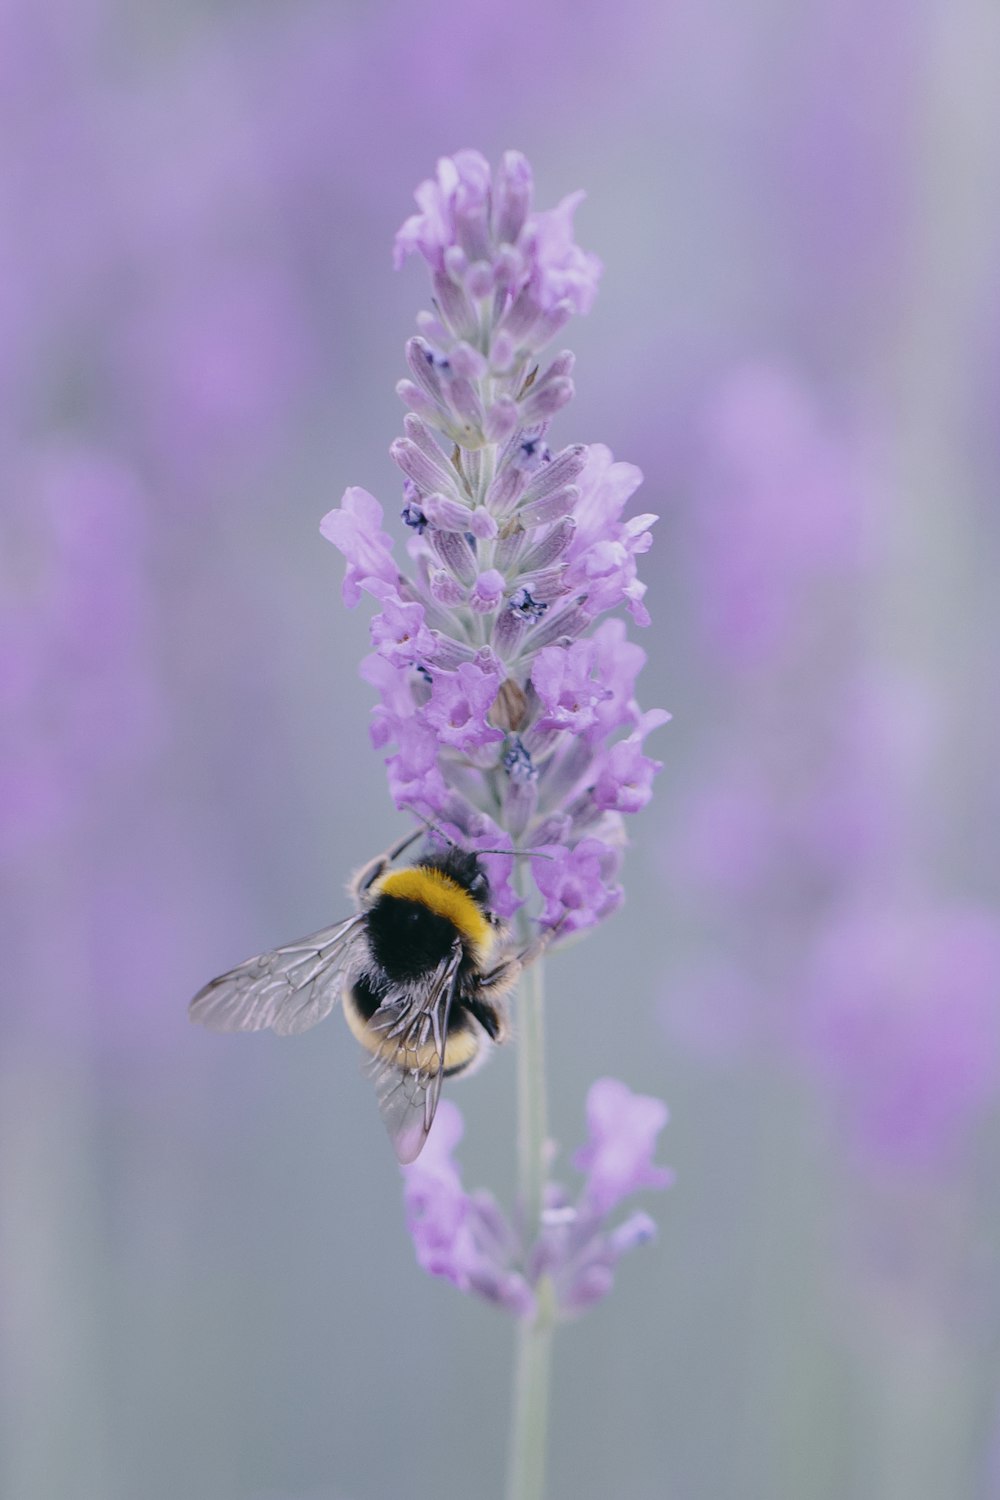 abeja amarilla y negra en flor púrpura